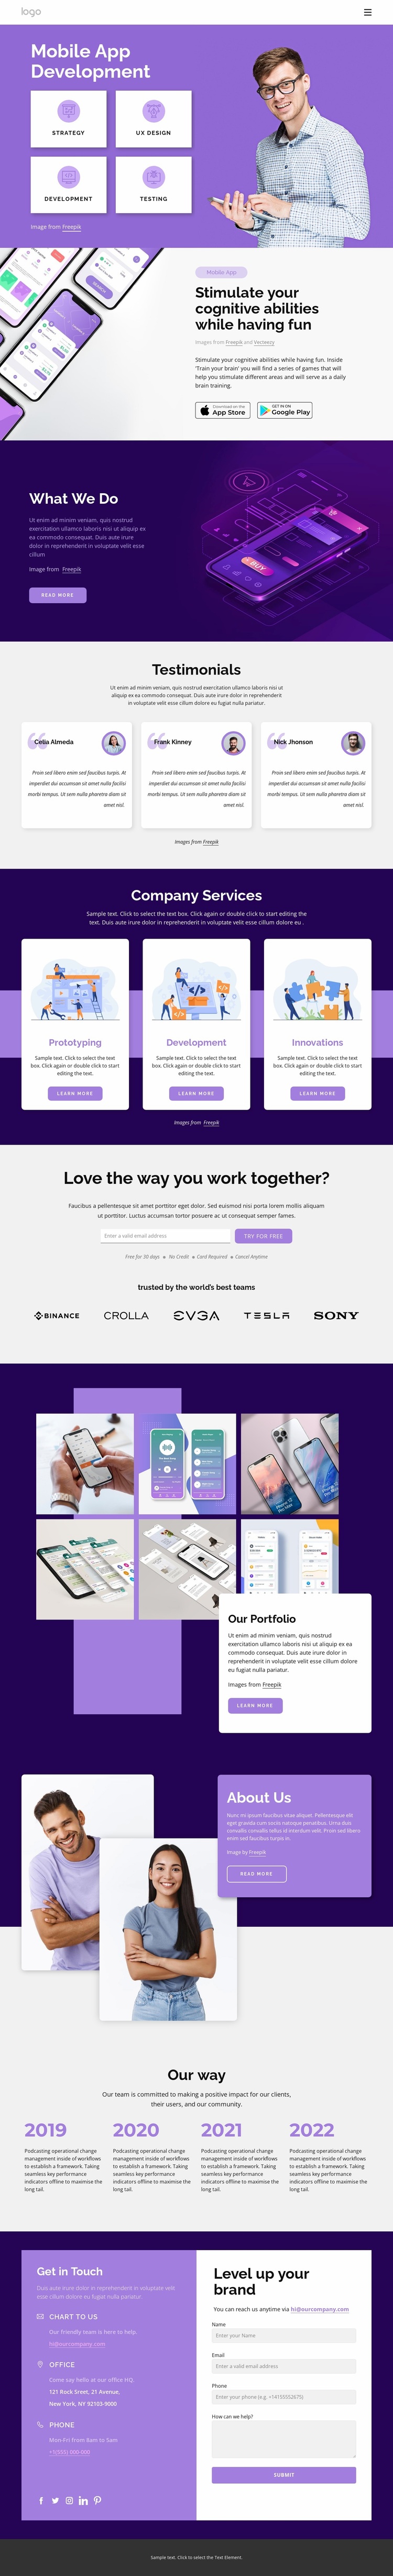 Digital firm Website Design